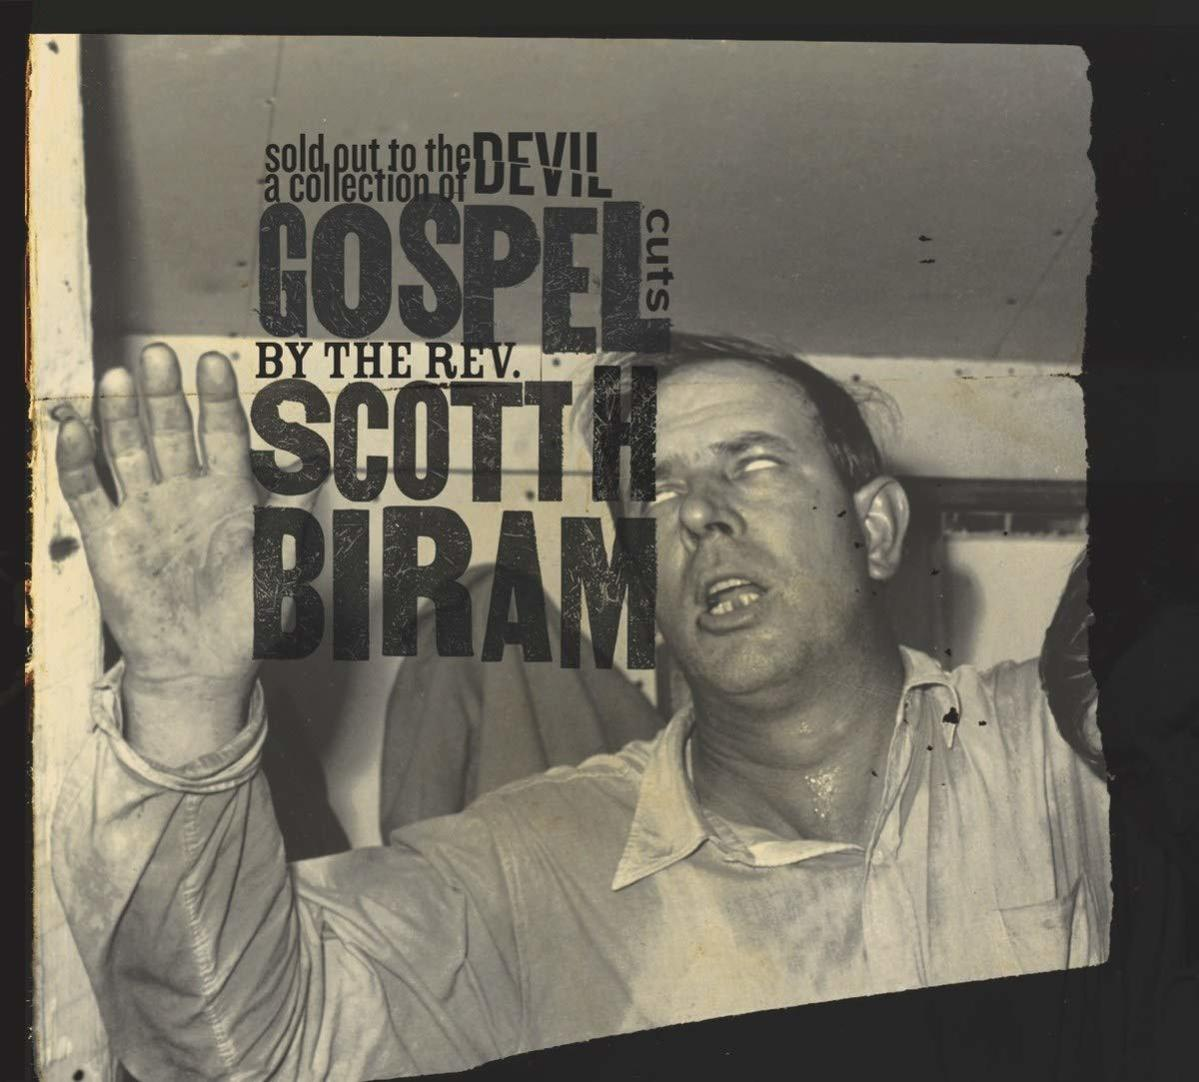 THE DEVIL TO OUT (Vinyl) H. SOLD Scott - Biram -